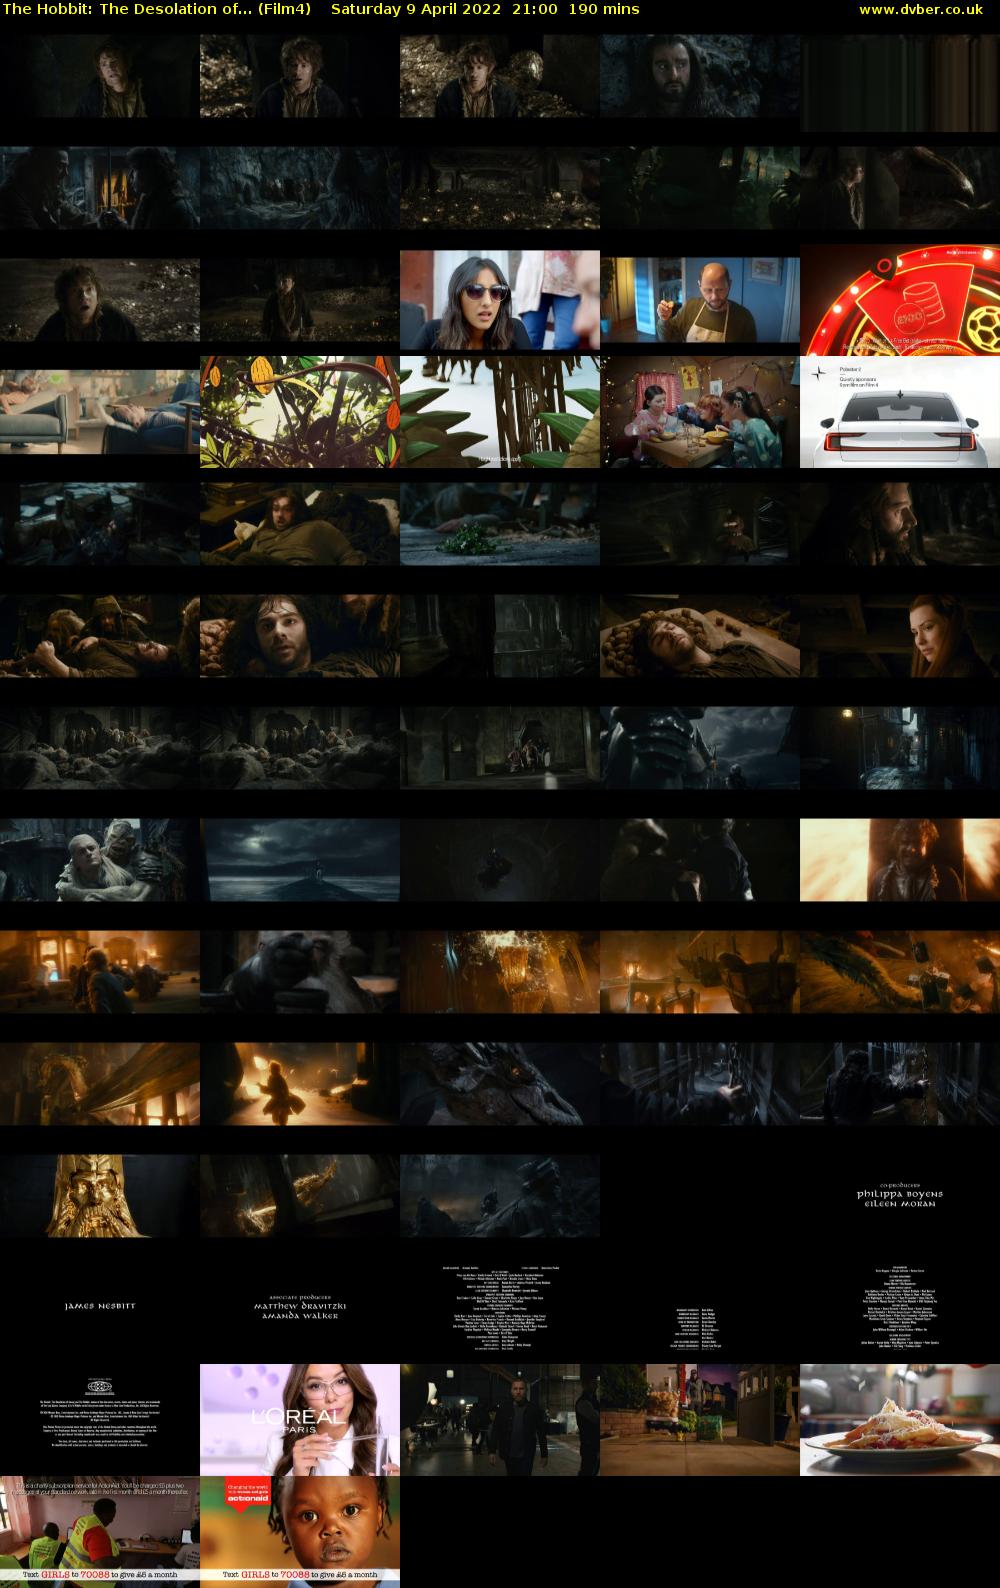 The Hobbit: The Desolation of... (Film4) Saturday 9 April 2022 21:00 - 00:10